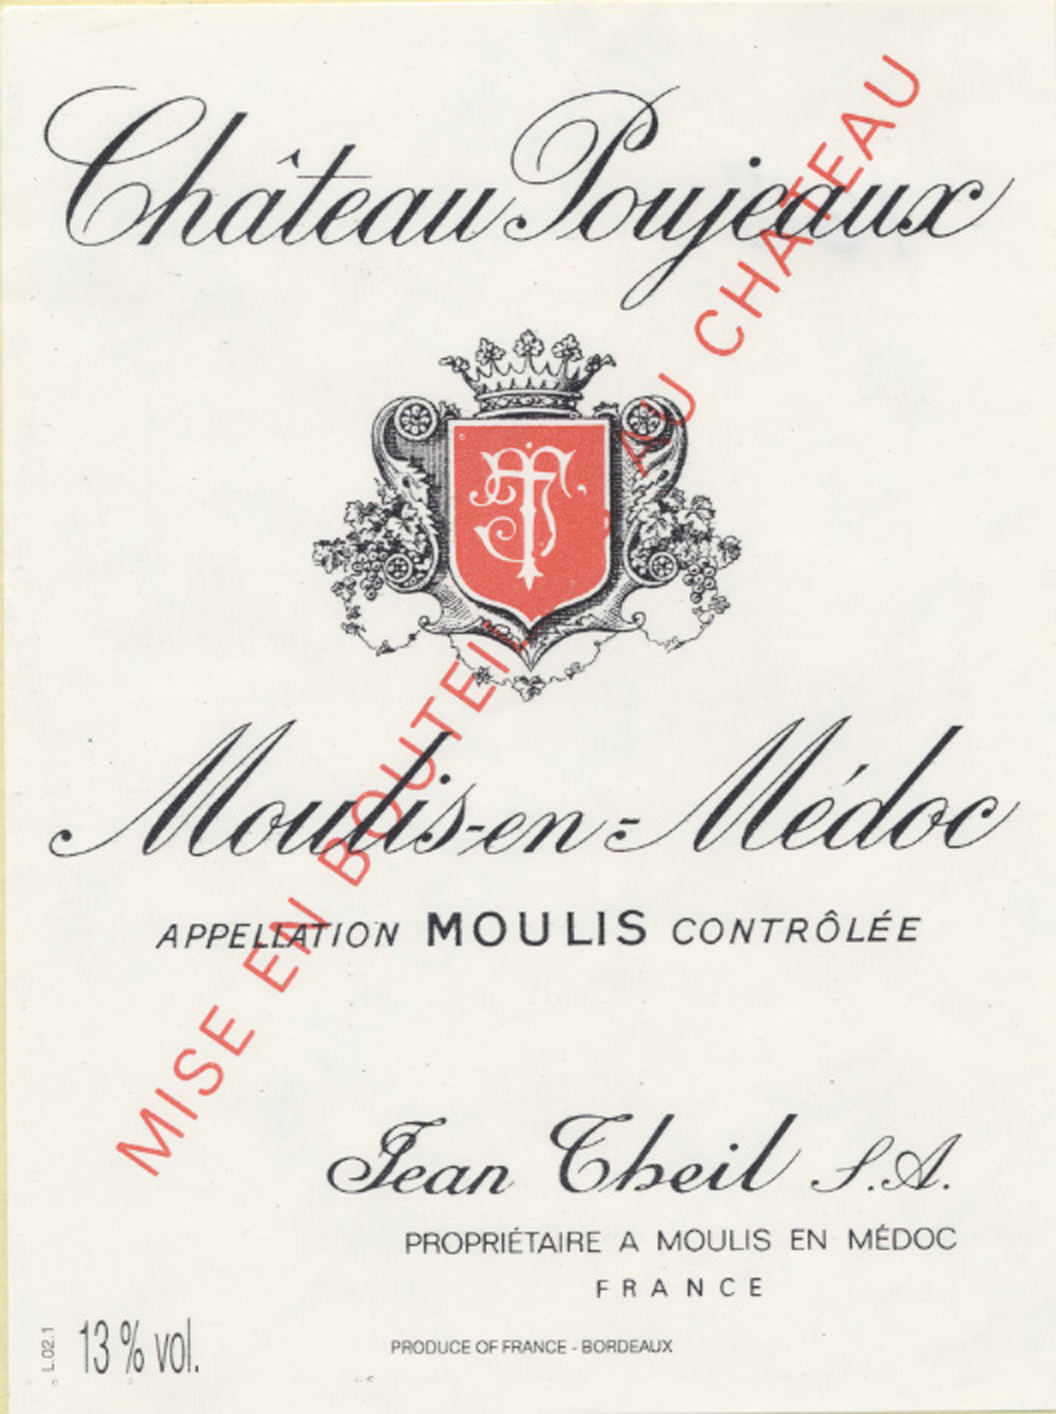 Chateau Poujeaux label